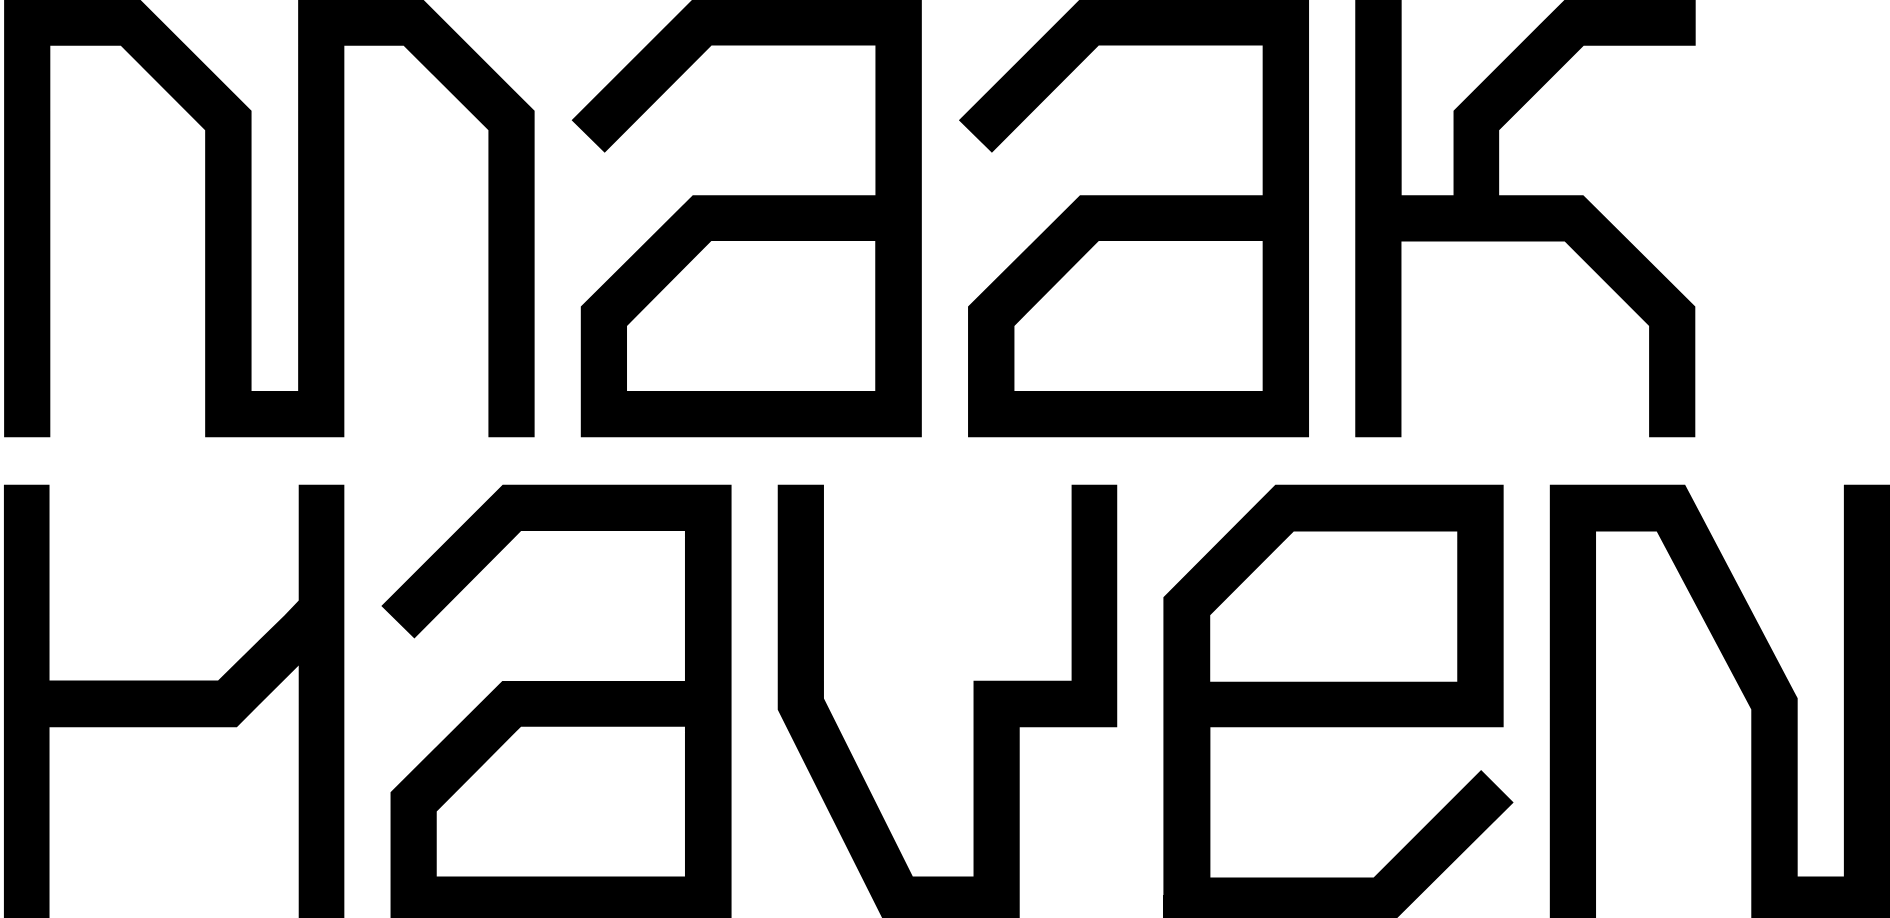 maakhaven logo.png